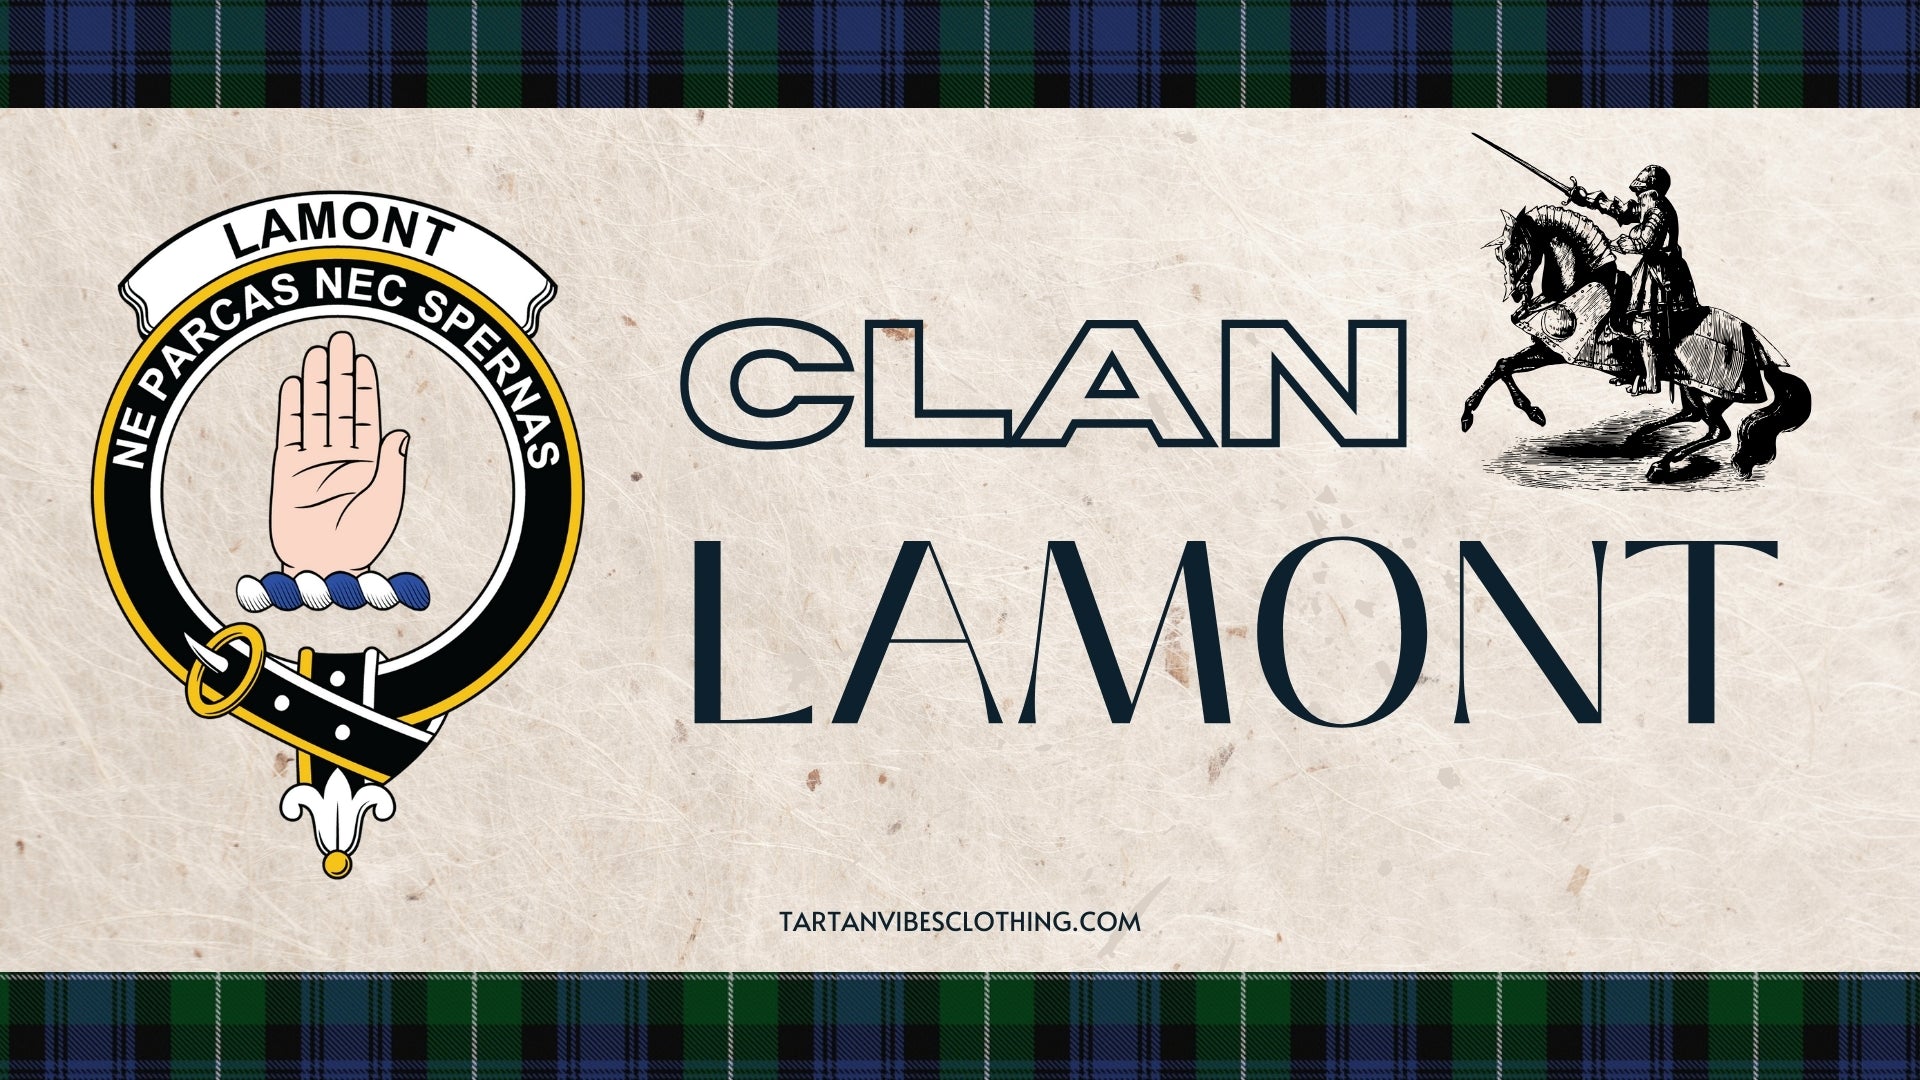 Clan Lamont